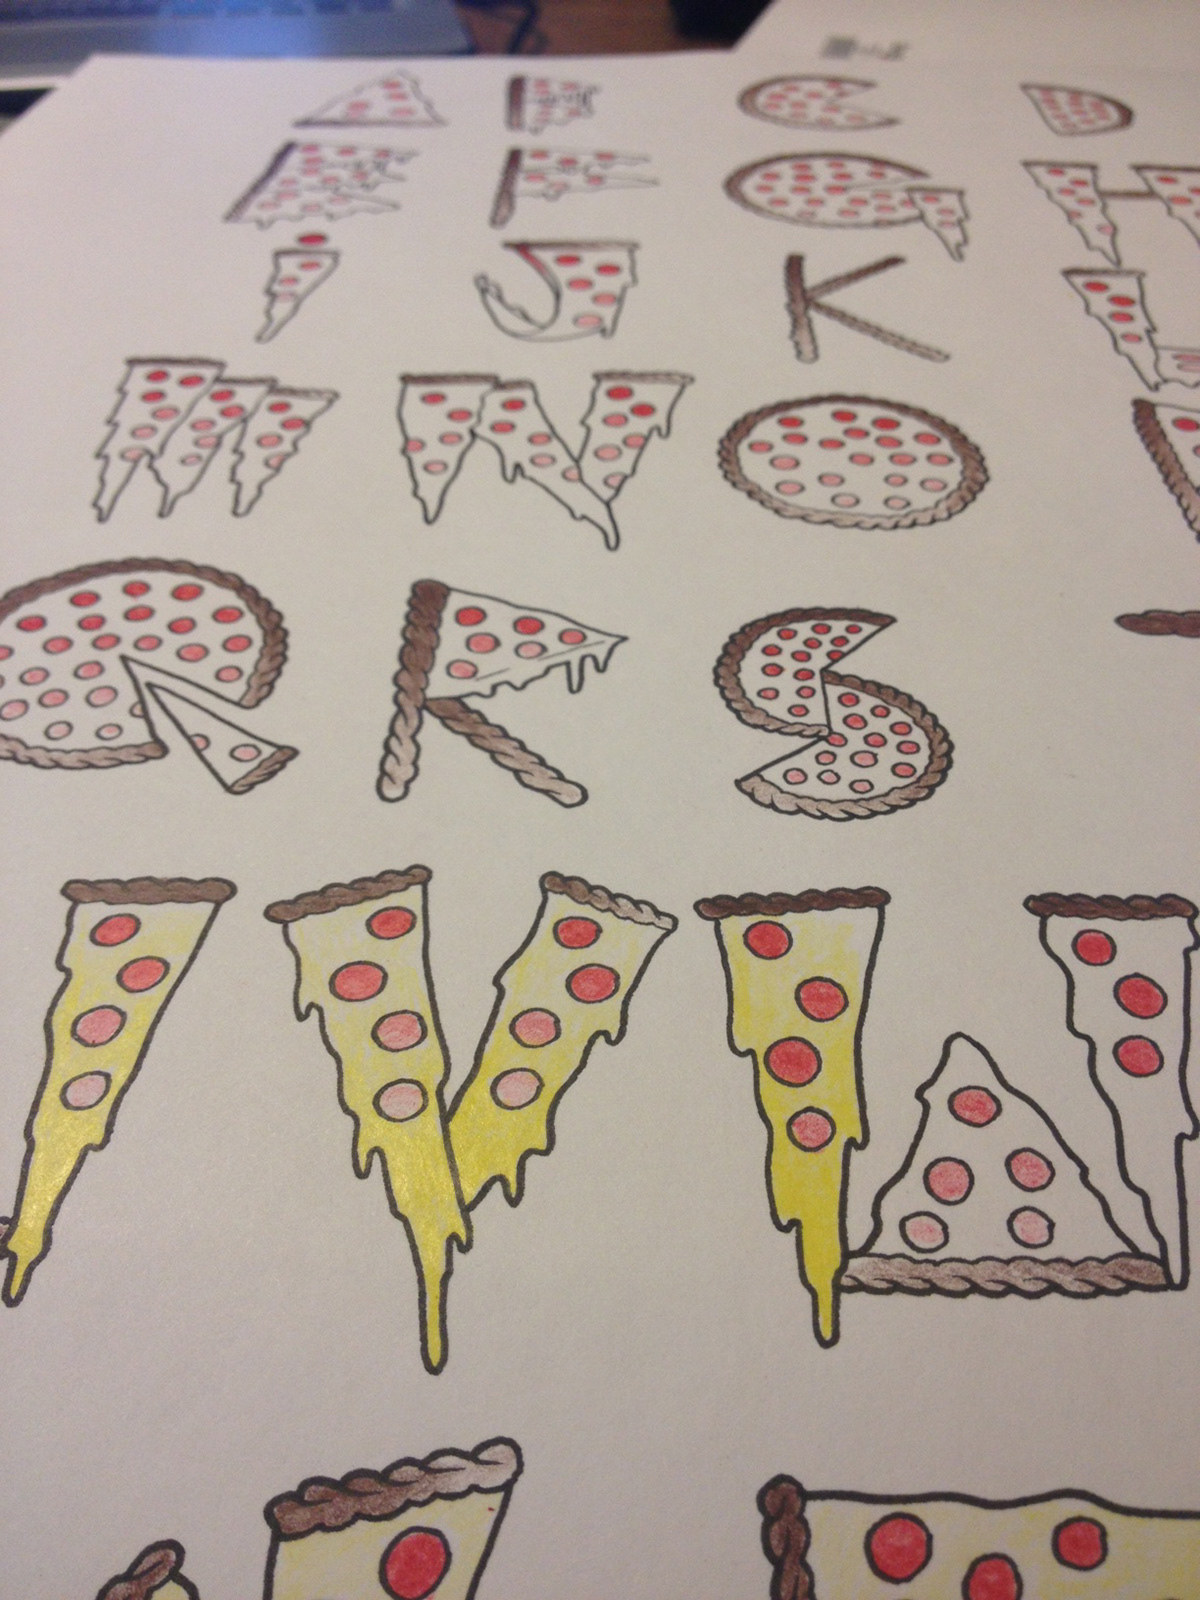 Pizza font slice pie Cheese drip pepperoni ZA cheesy type Typeface handdrawn drawn micron pen